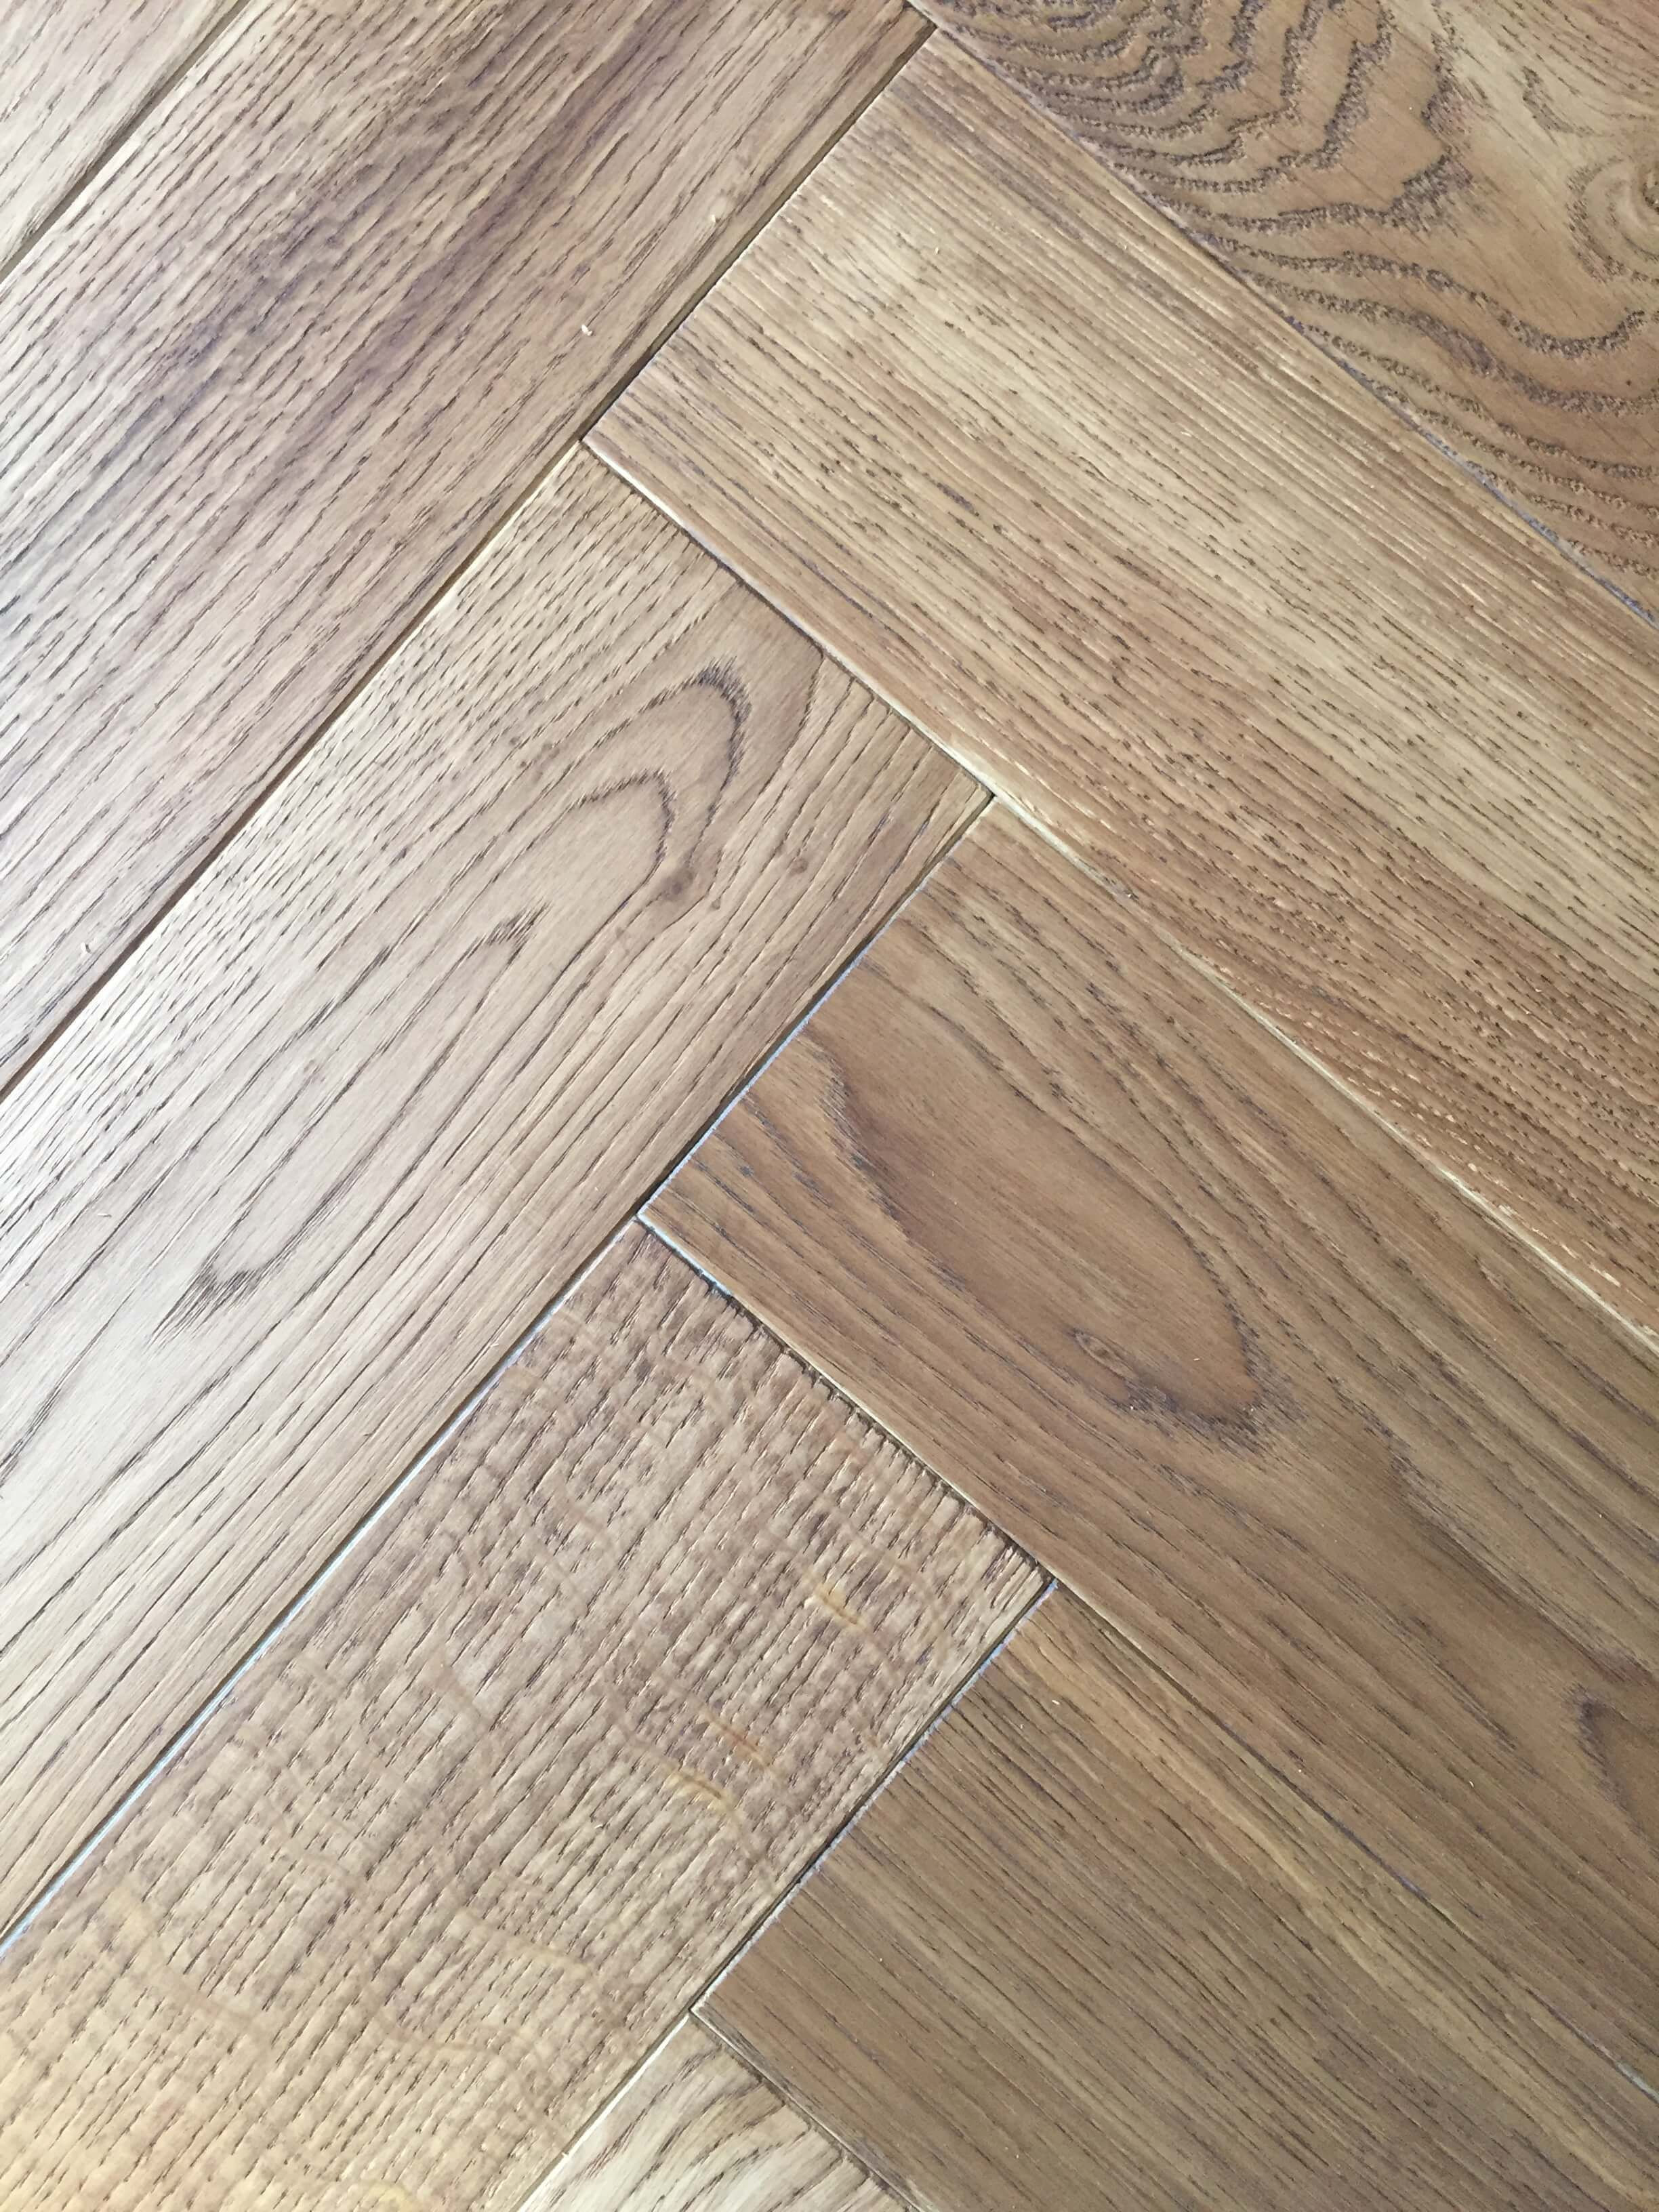 bamboo flooring vs hardwood flooring of roll out laminate wood flooring bamboo vs hardwood flooring new for roll out laminate wood flooring bamboo vs hardwood flooring new hotel od barcelona projekt parklex